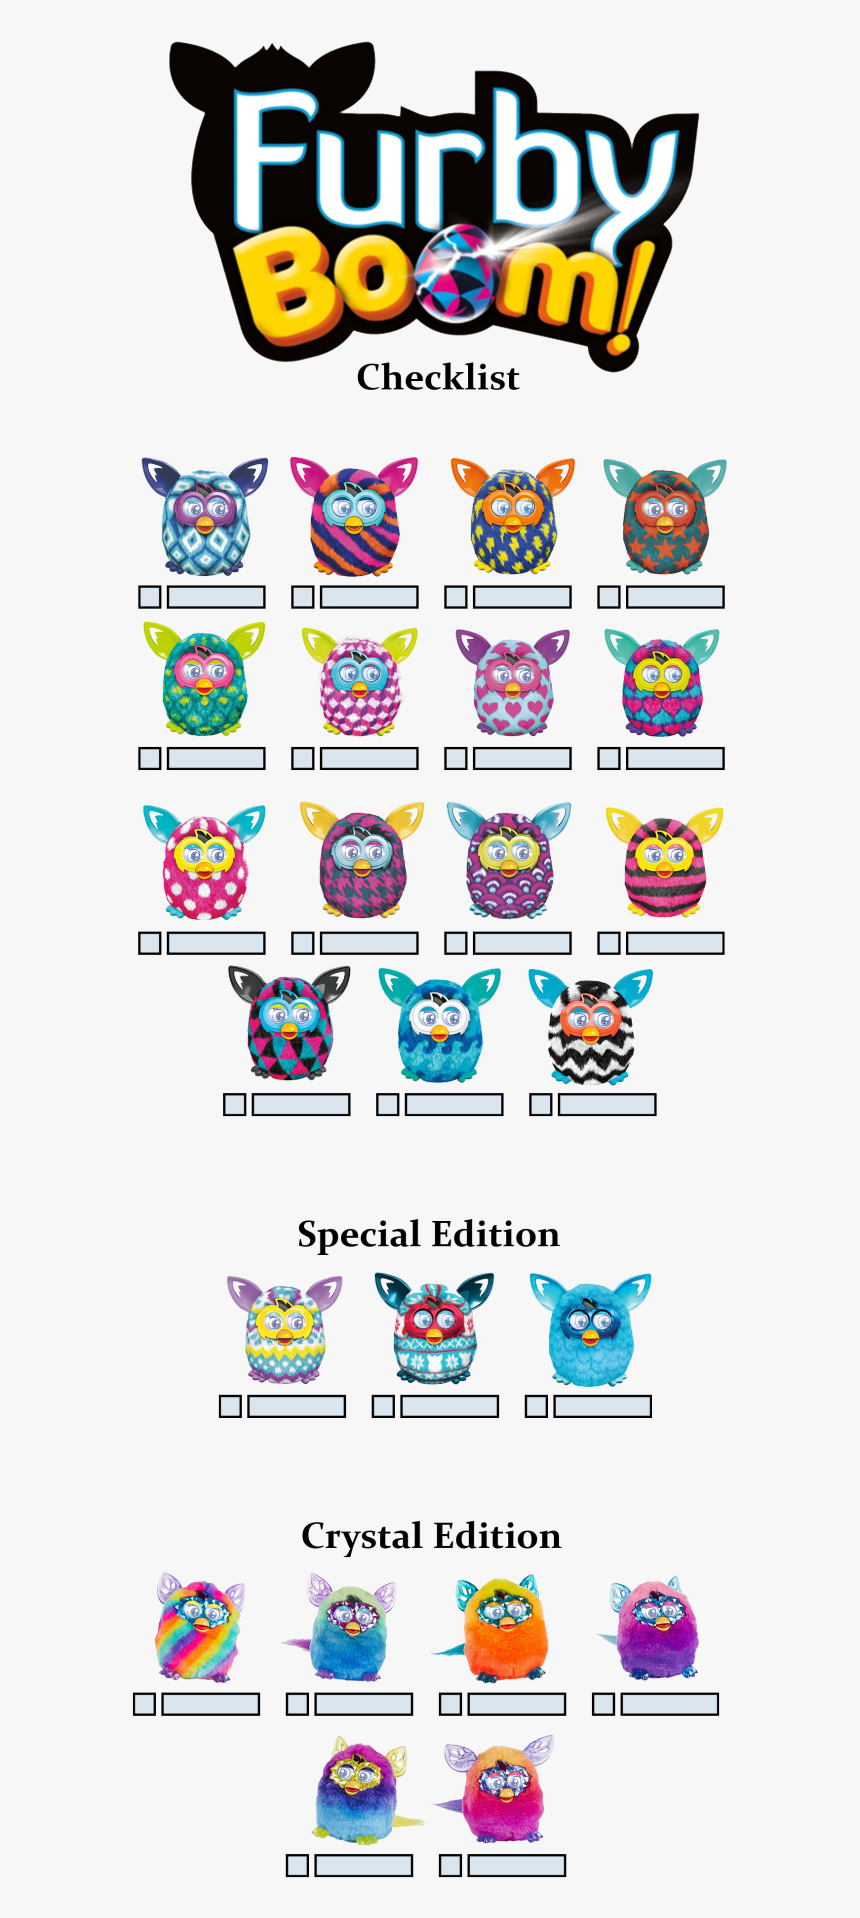 Furby Boom Checklist - Furby Crystal, HD Png Download, Free Download